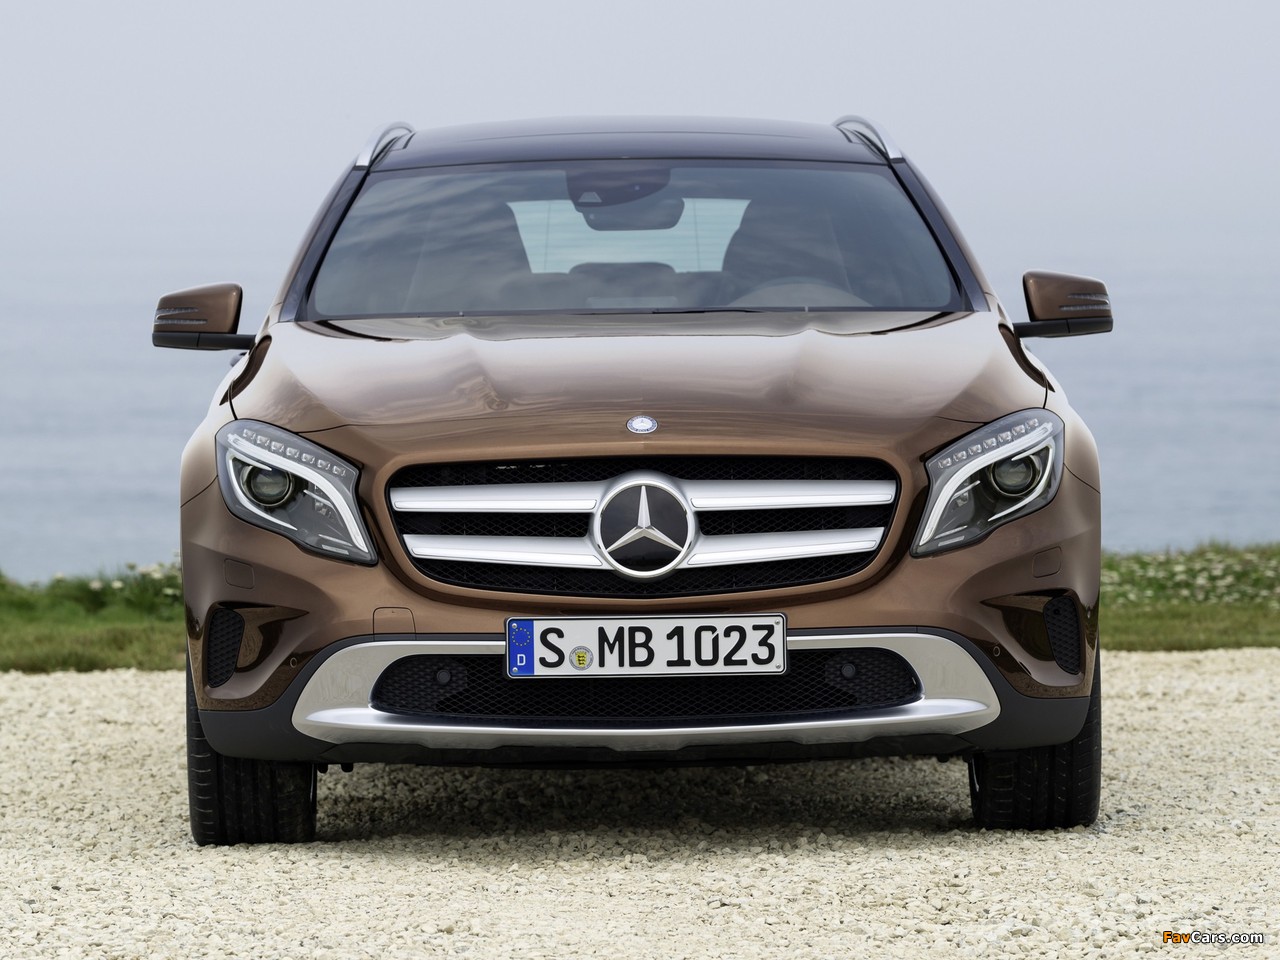 Mercedes-Benz GLA 220 CDI 4MATIC (X156) 2014 pictures (1280 x 960)